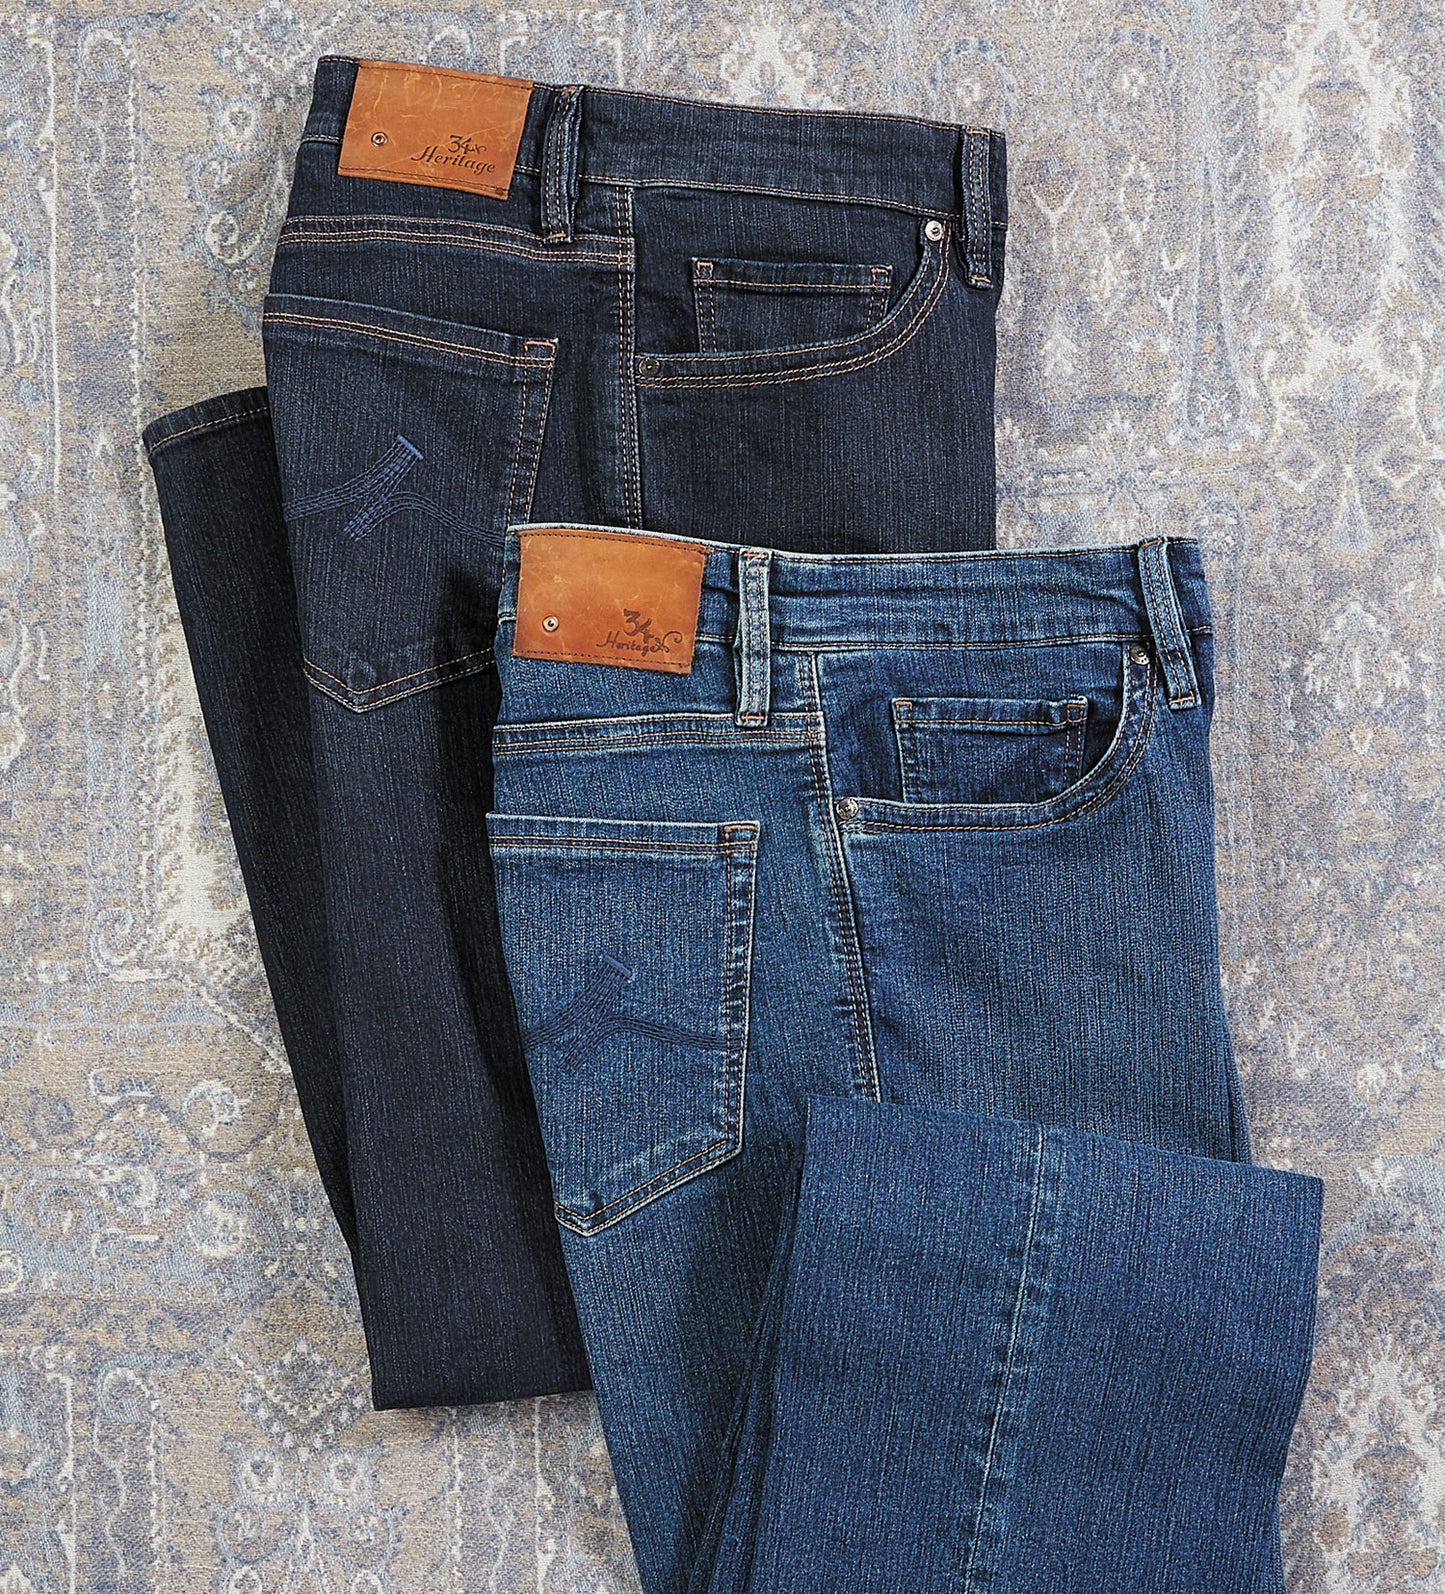 34 Heritage Charisma Comfort Jeans